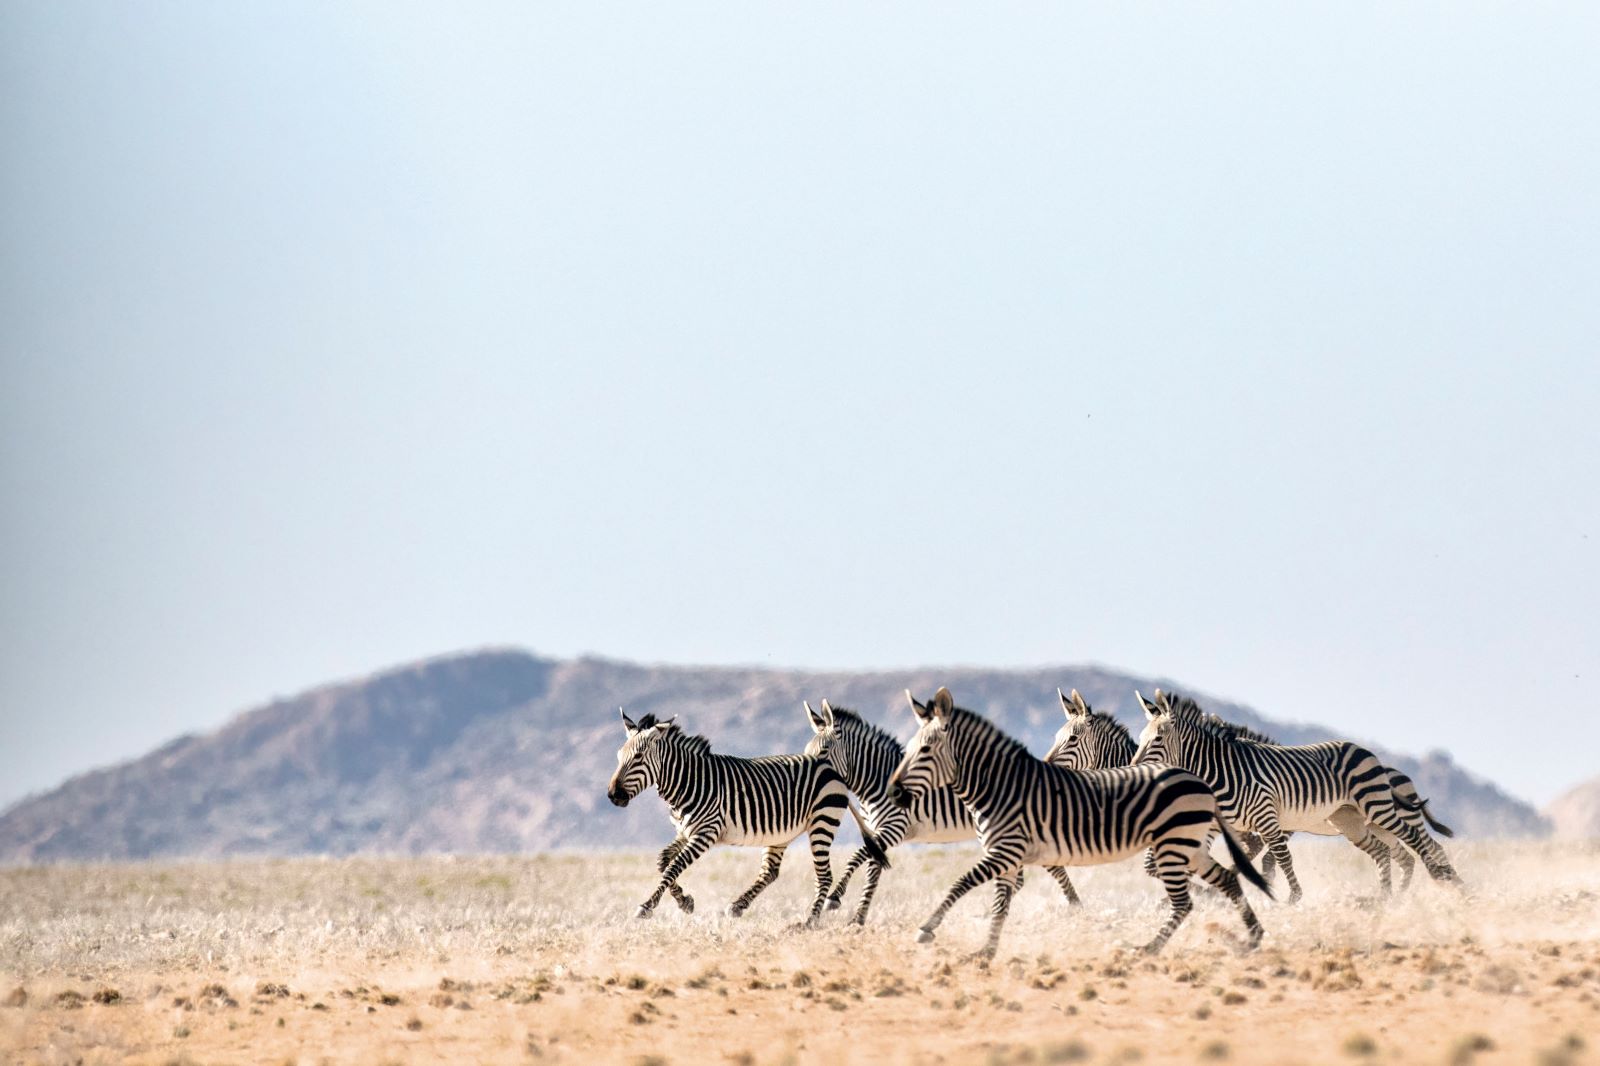 Zebras galloping across the Kalahari Desert in Botswana